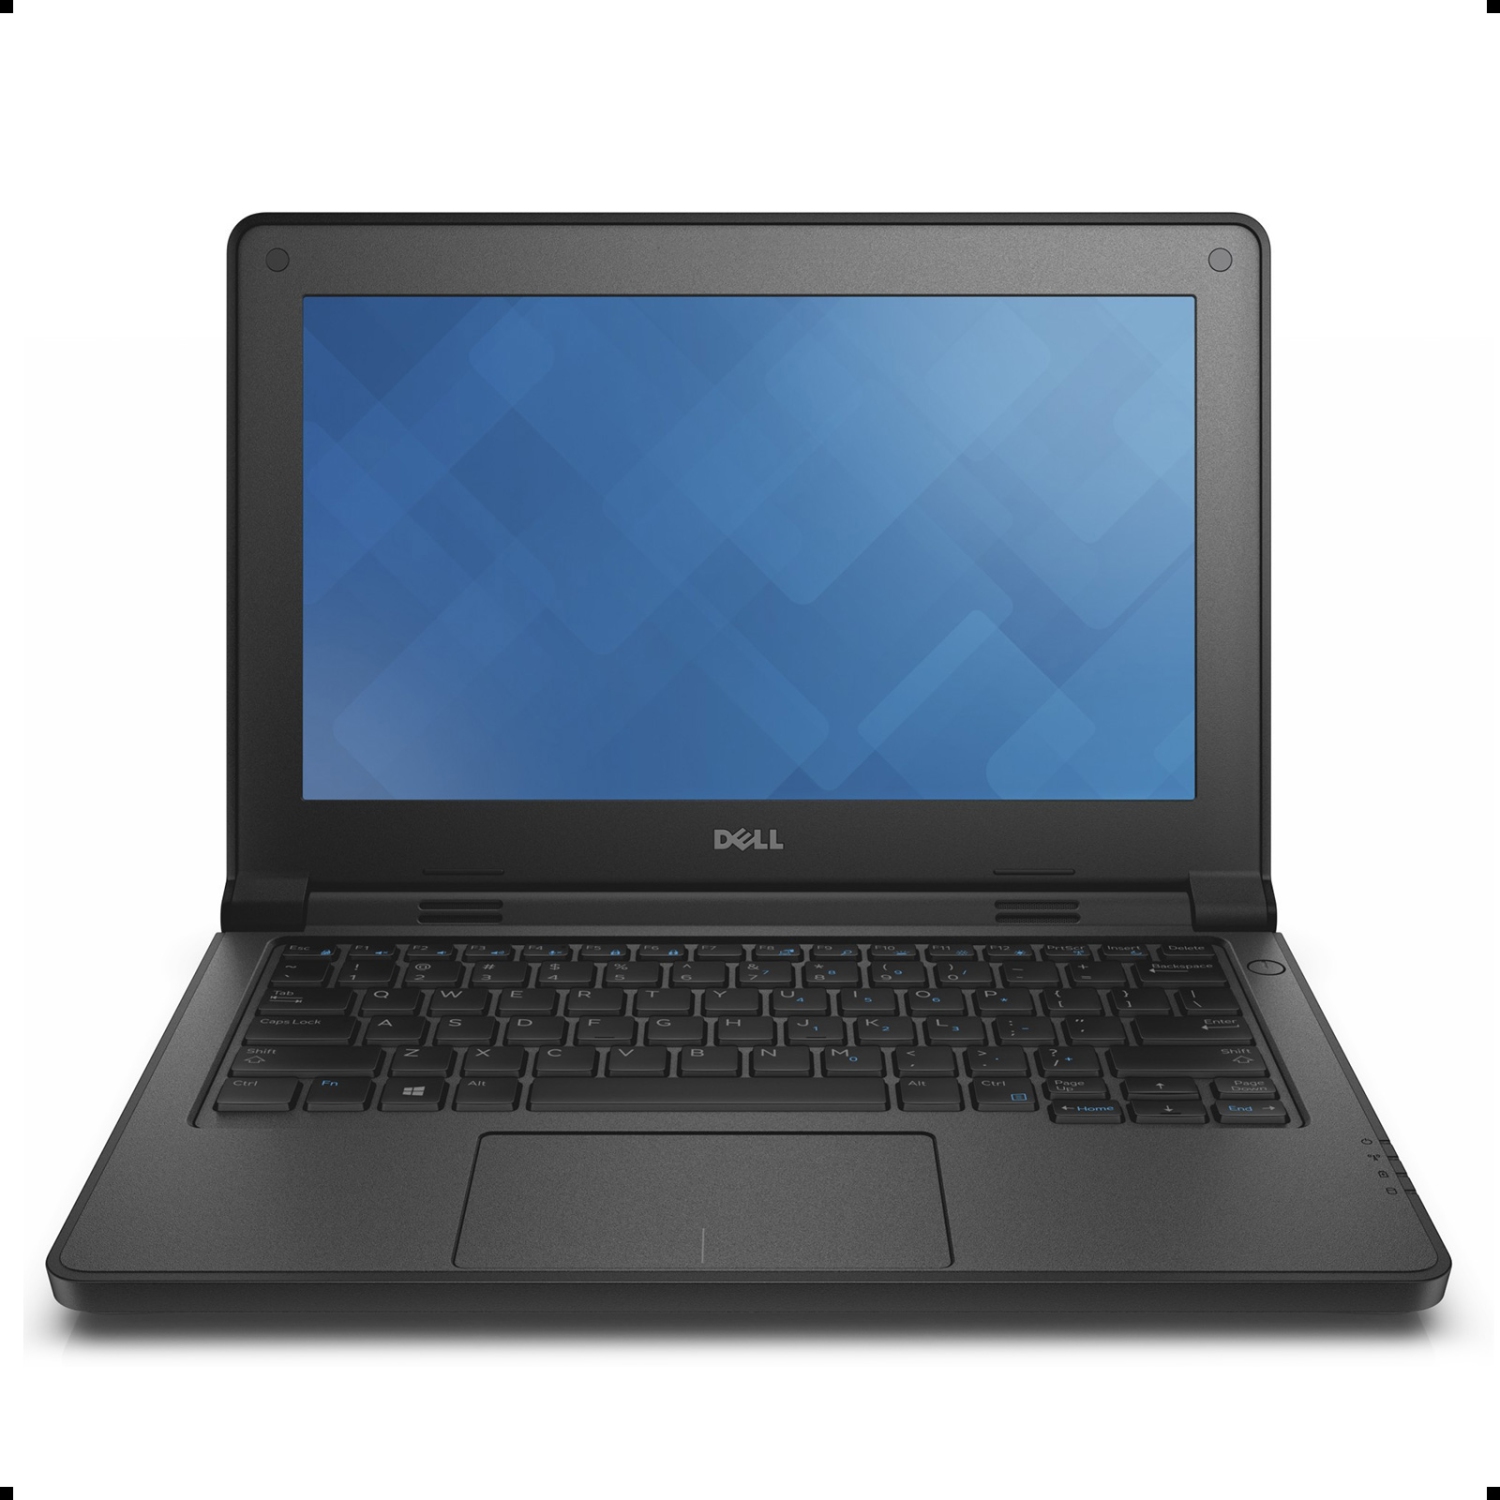 Dell Latitude 3150 11.6" Laptop, INTEL PENTIUM N3540 2.16GHZ, 4G DDR3L, 128G SSD, HDMI, USB 3.0, Windows 10 Pro 64 Bit-Multi-Language(EN/ES/FR)-Refurbished